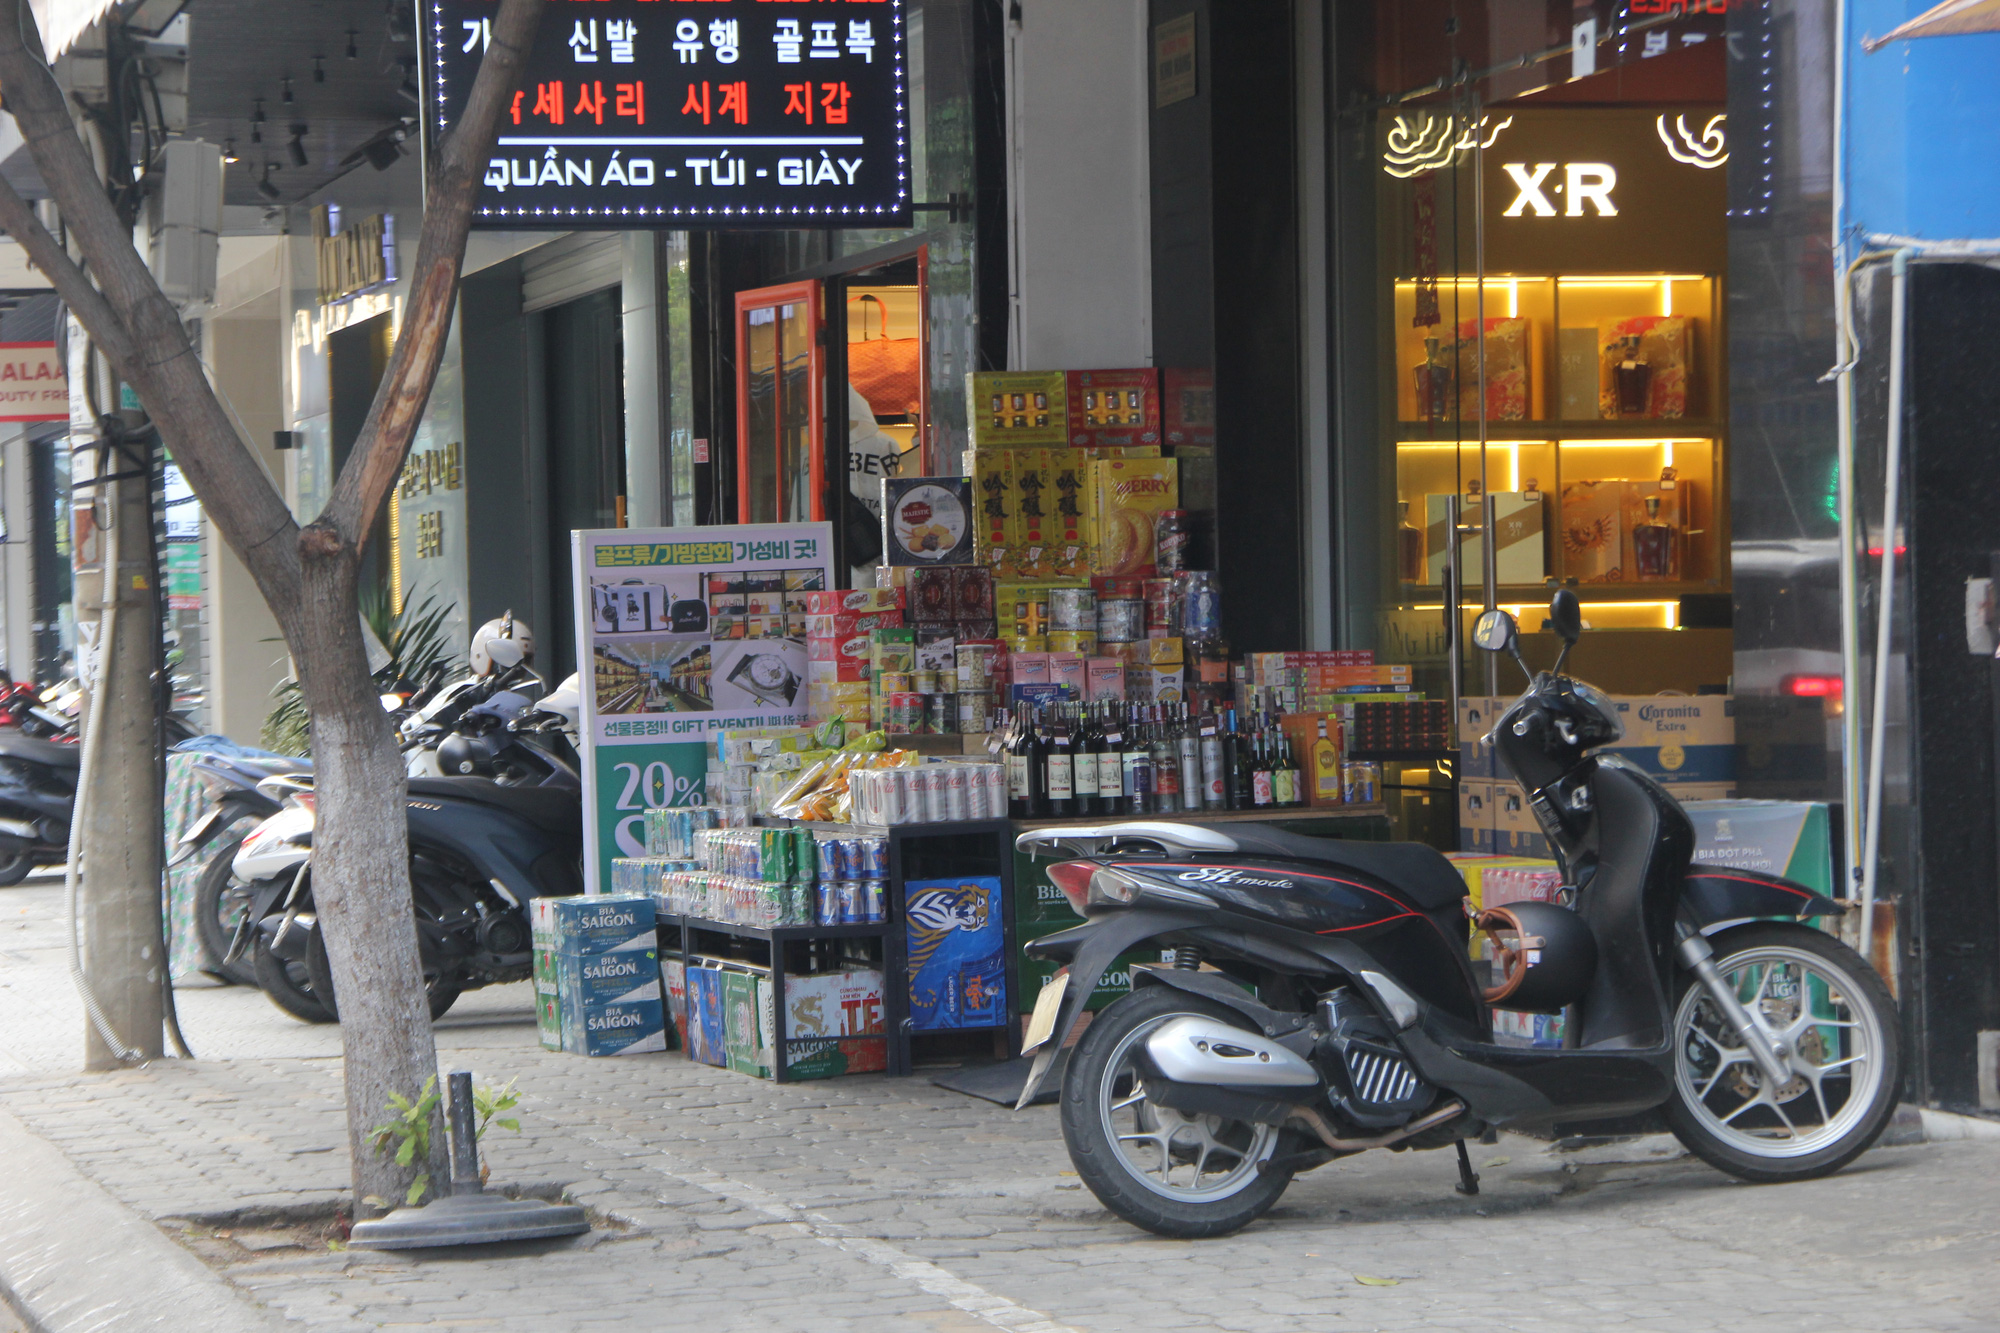 Sidewalk eateries remain rampant in Da Nang despite ban